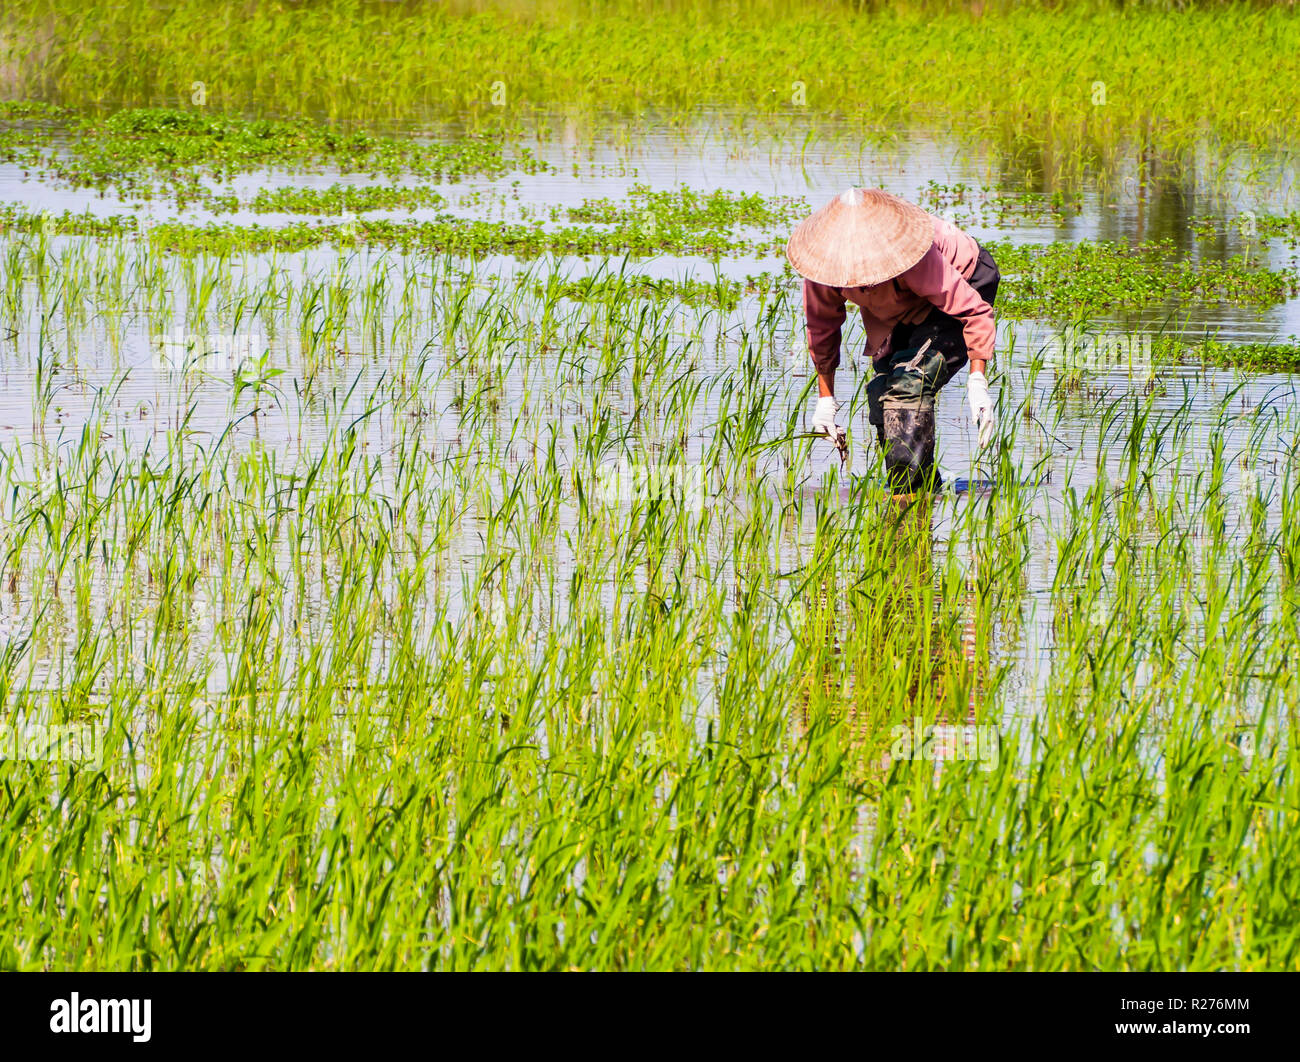 Vietnamese farmer working in rice paddy field during rainy season Stock Photo